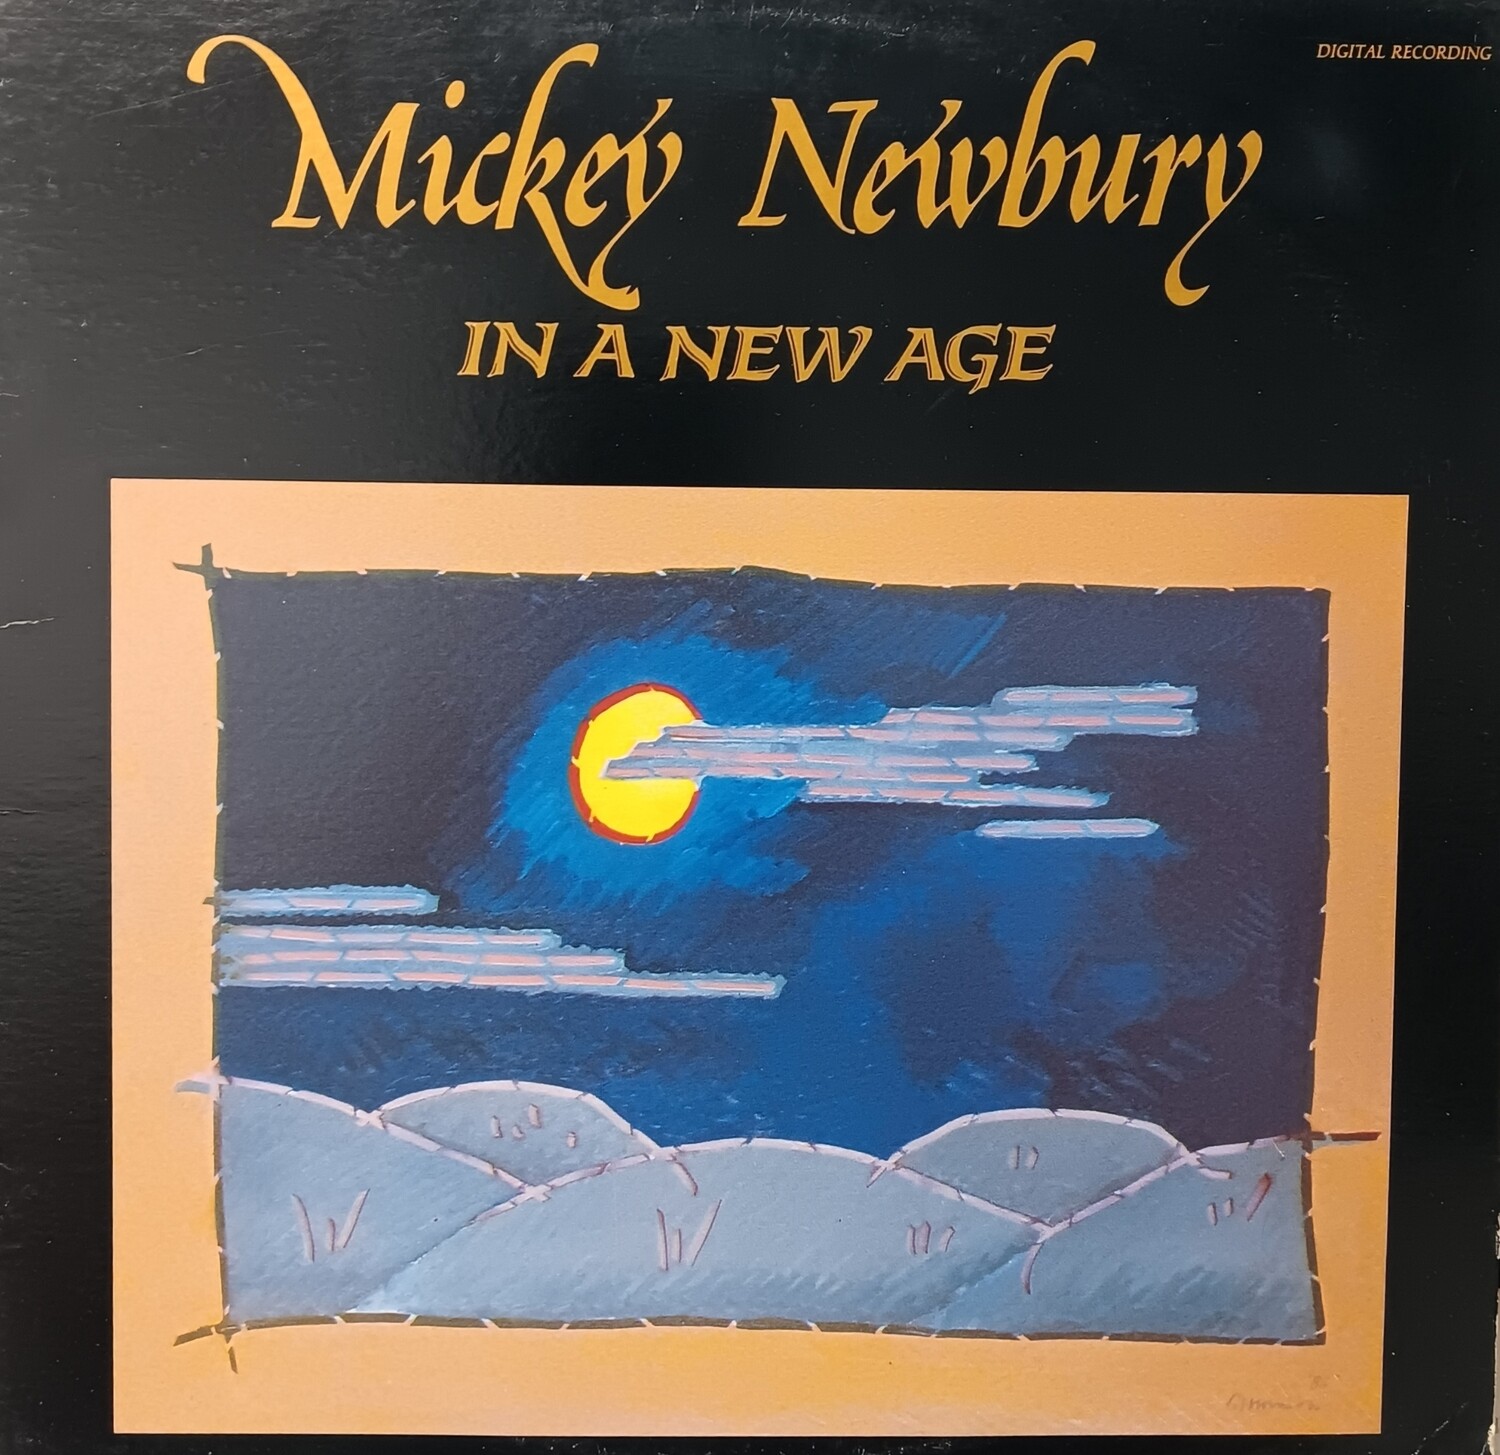 Mickey Newbury - A Legend in New Age